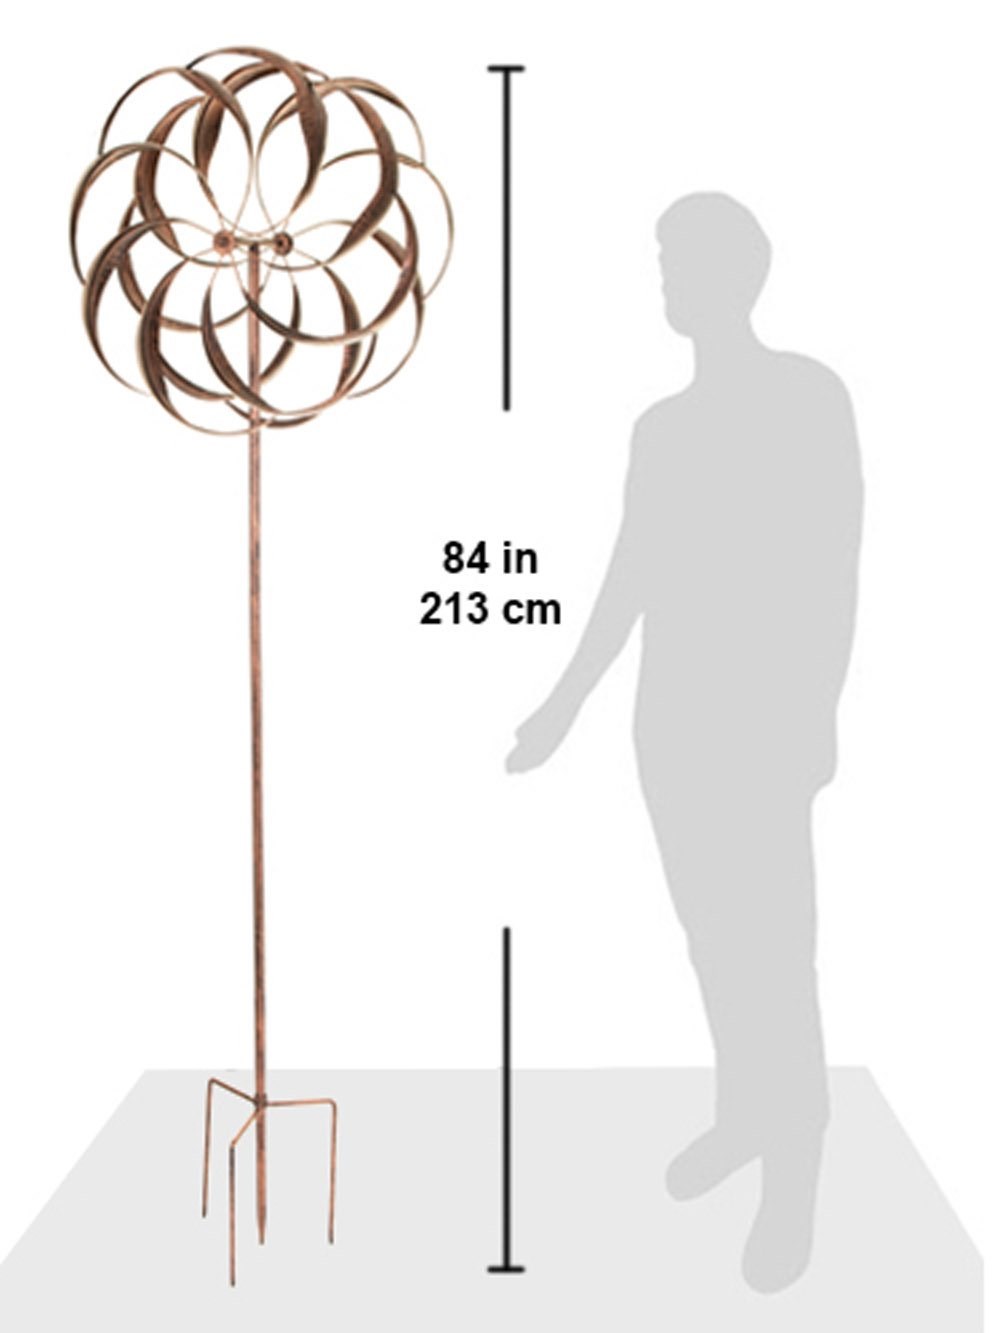 Brushed Copper Pemberley Wind Spinner Dia 61cm by Creekwood™